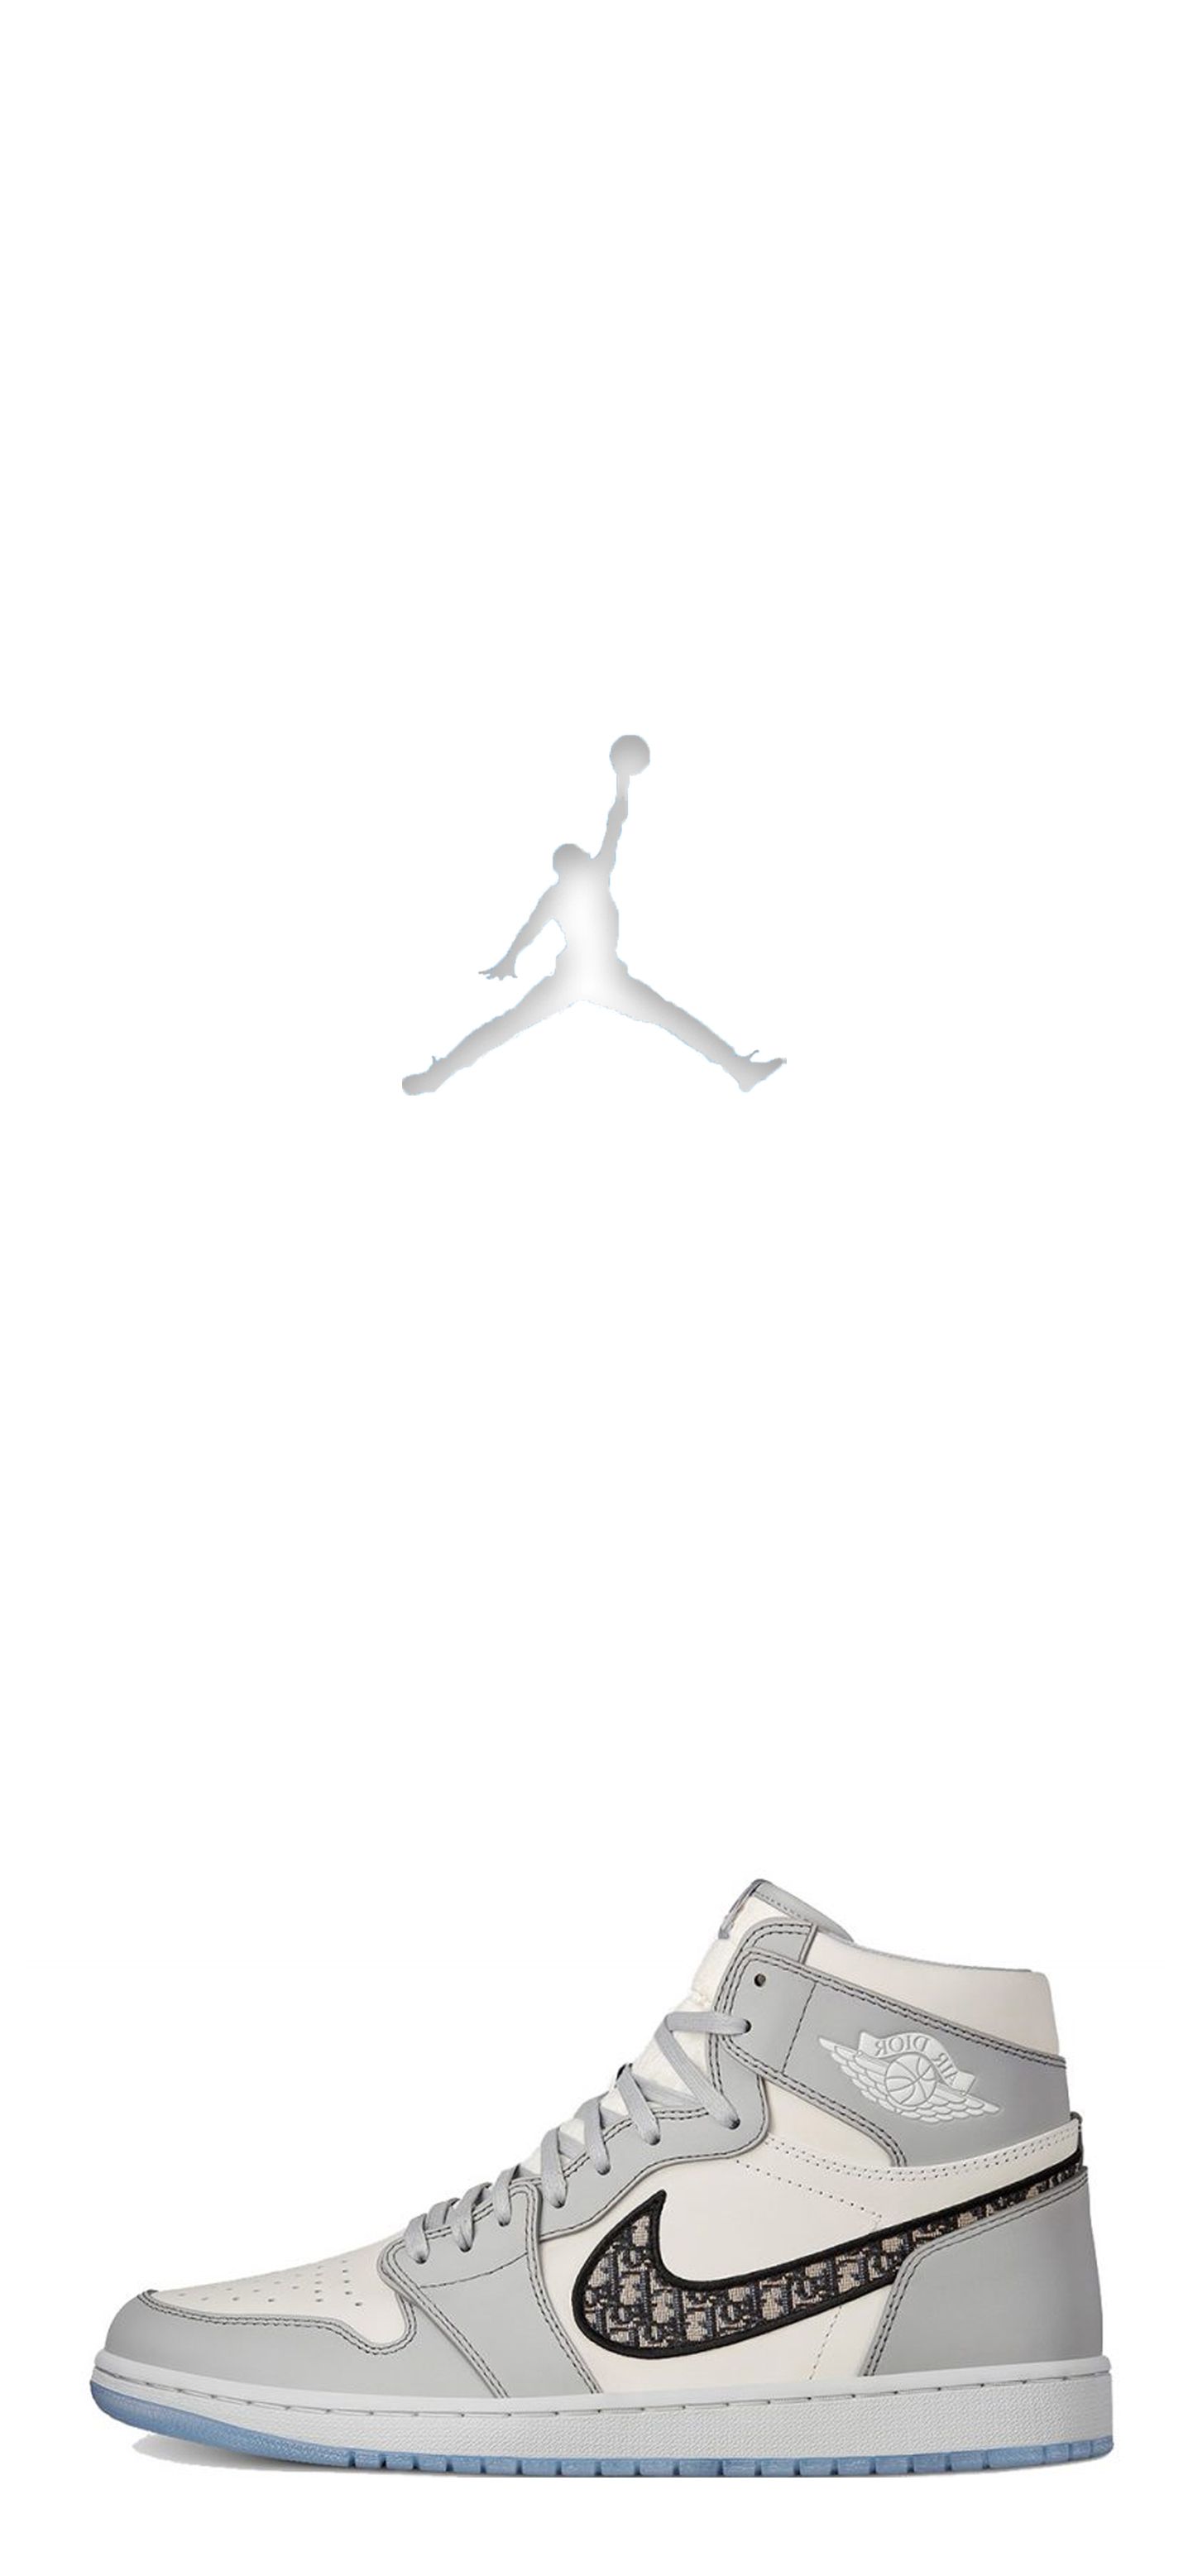 Nike air jordan shoes .com